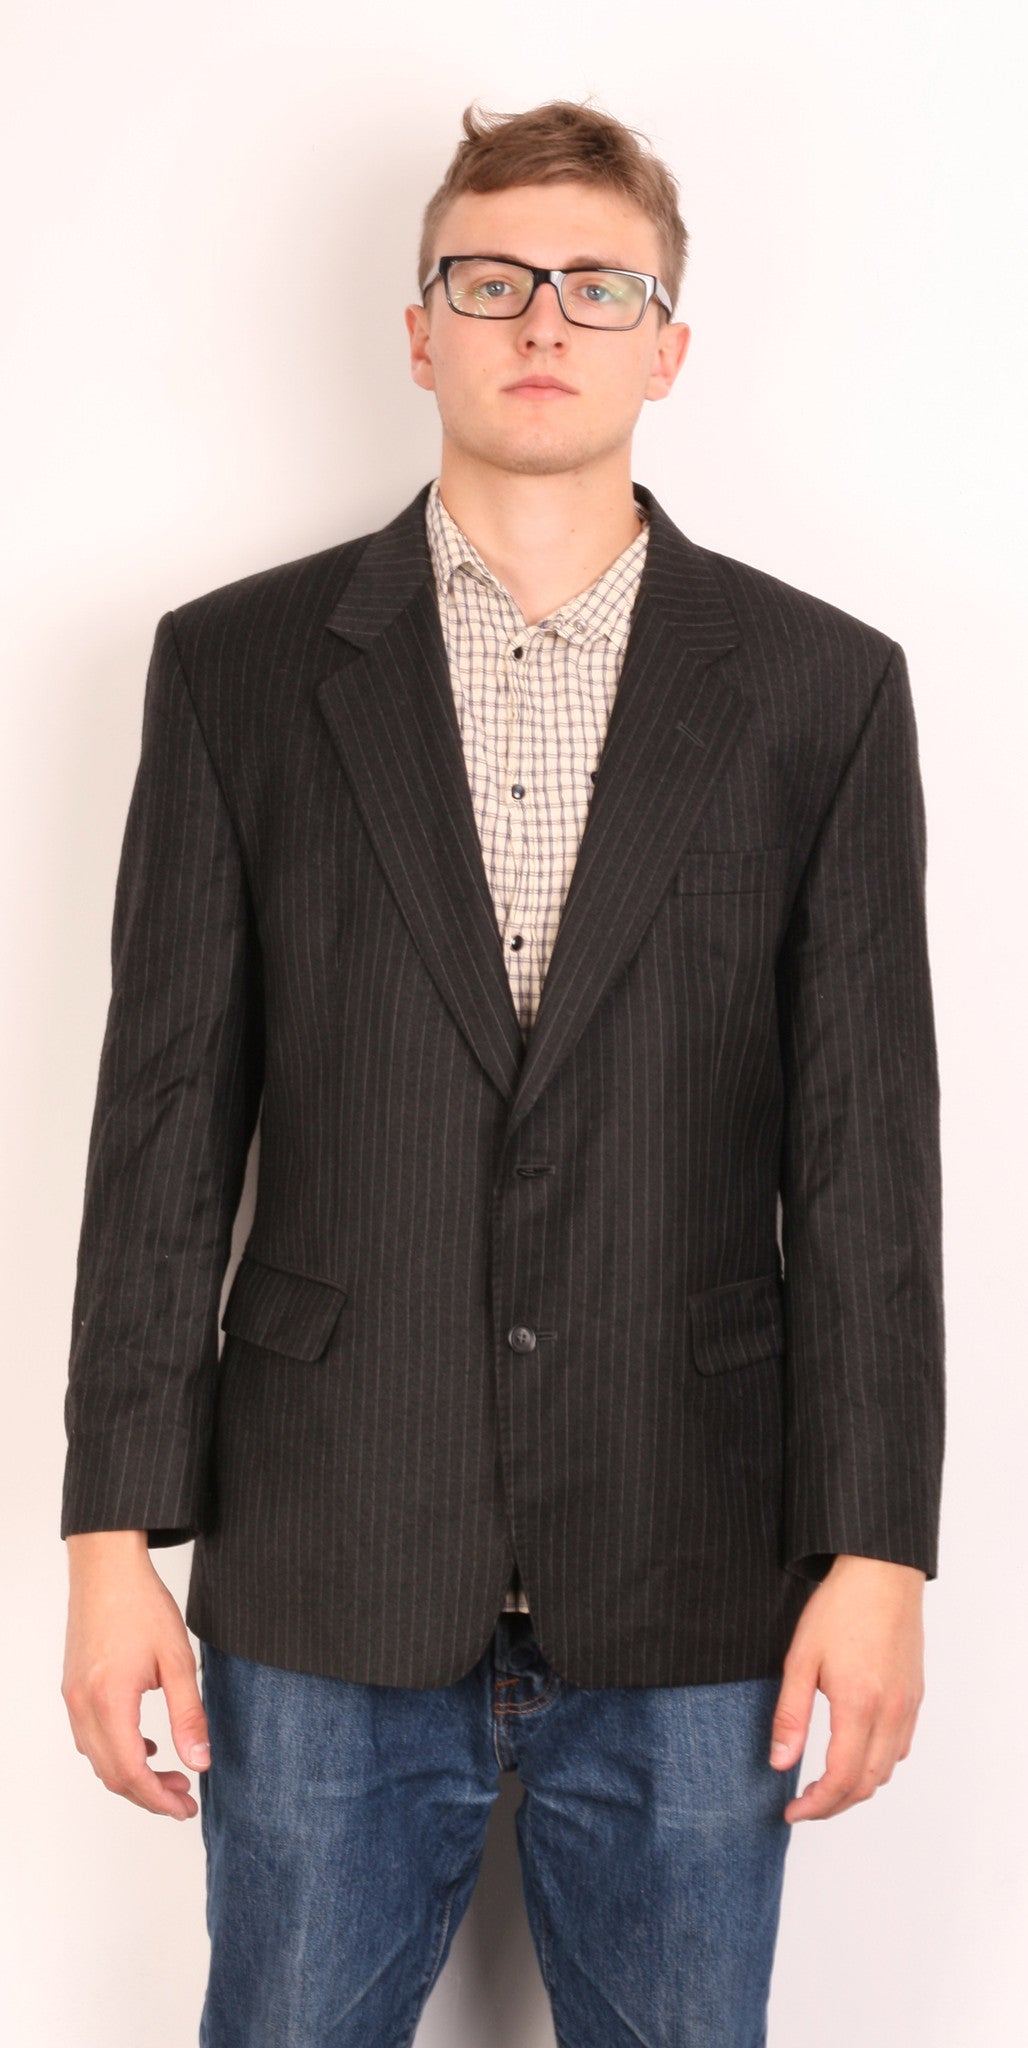 Daks Jermyn Street Mens 42 S Blazer Jacket Wool Striped Black - RetrospectClothes